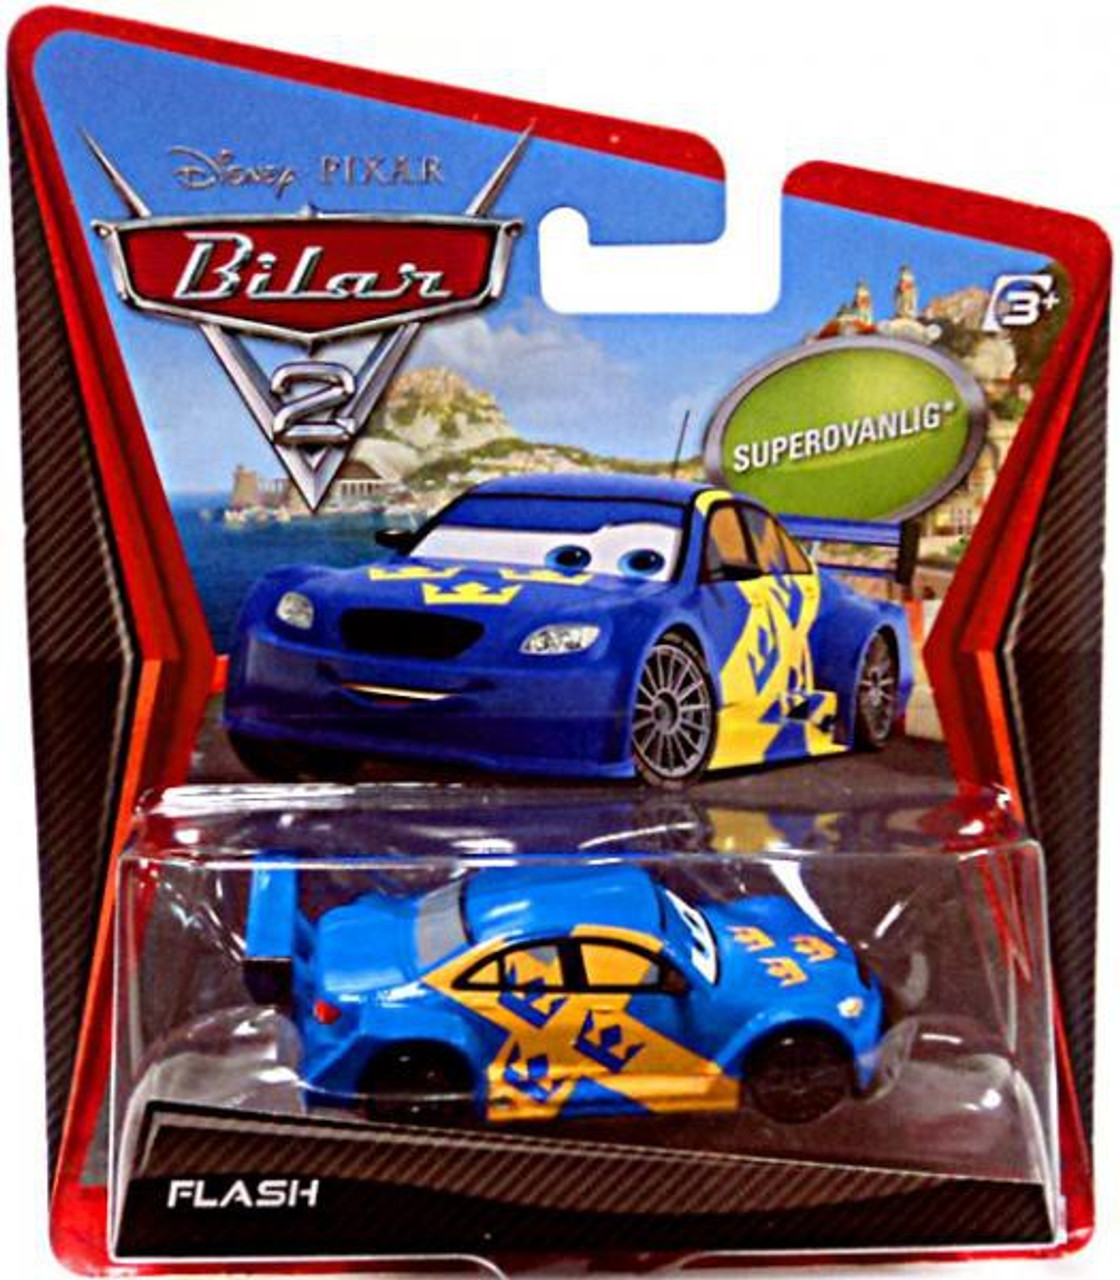 Disney Pixar Cars Cars 2 Main Series Flash 155 Diecast Car Sweden